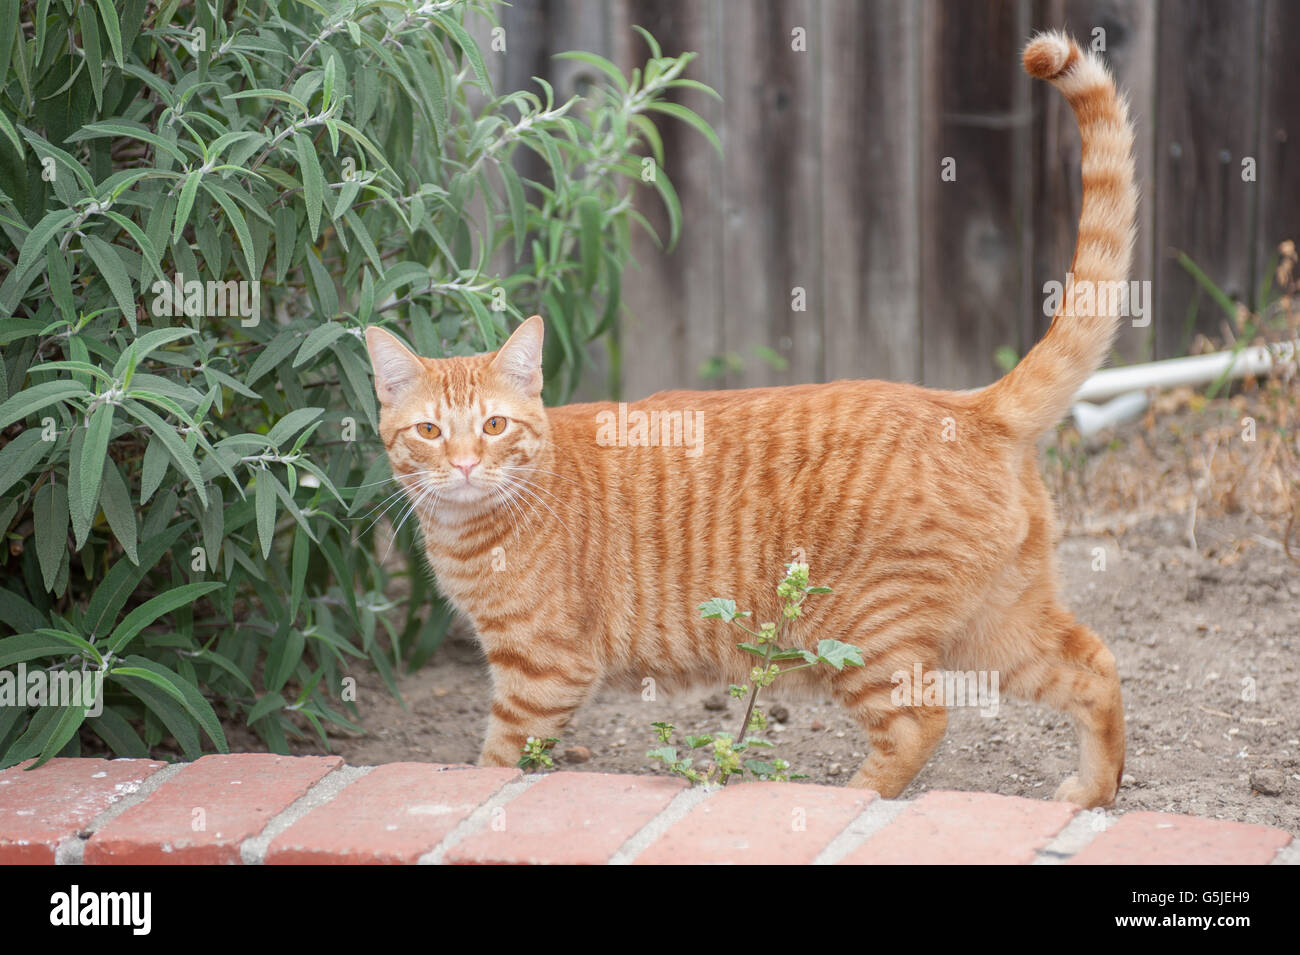 Gato atigrado naranja de alerta permanente con cola arriba Foto de stock